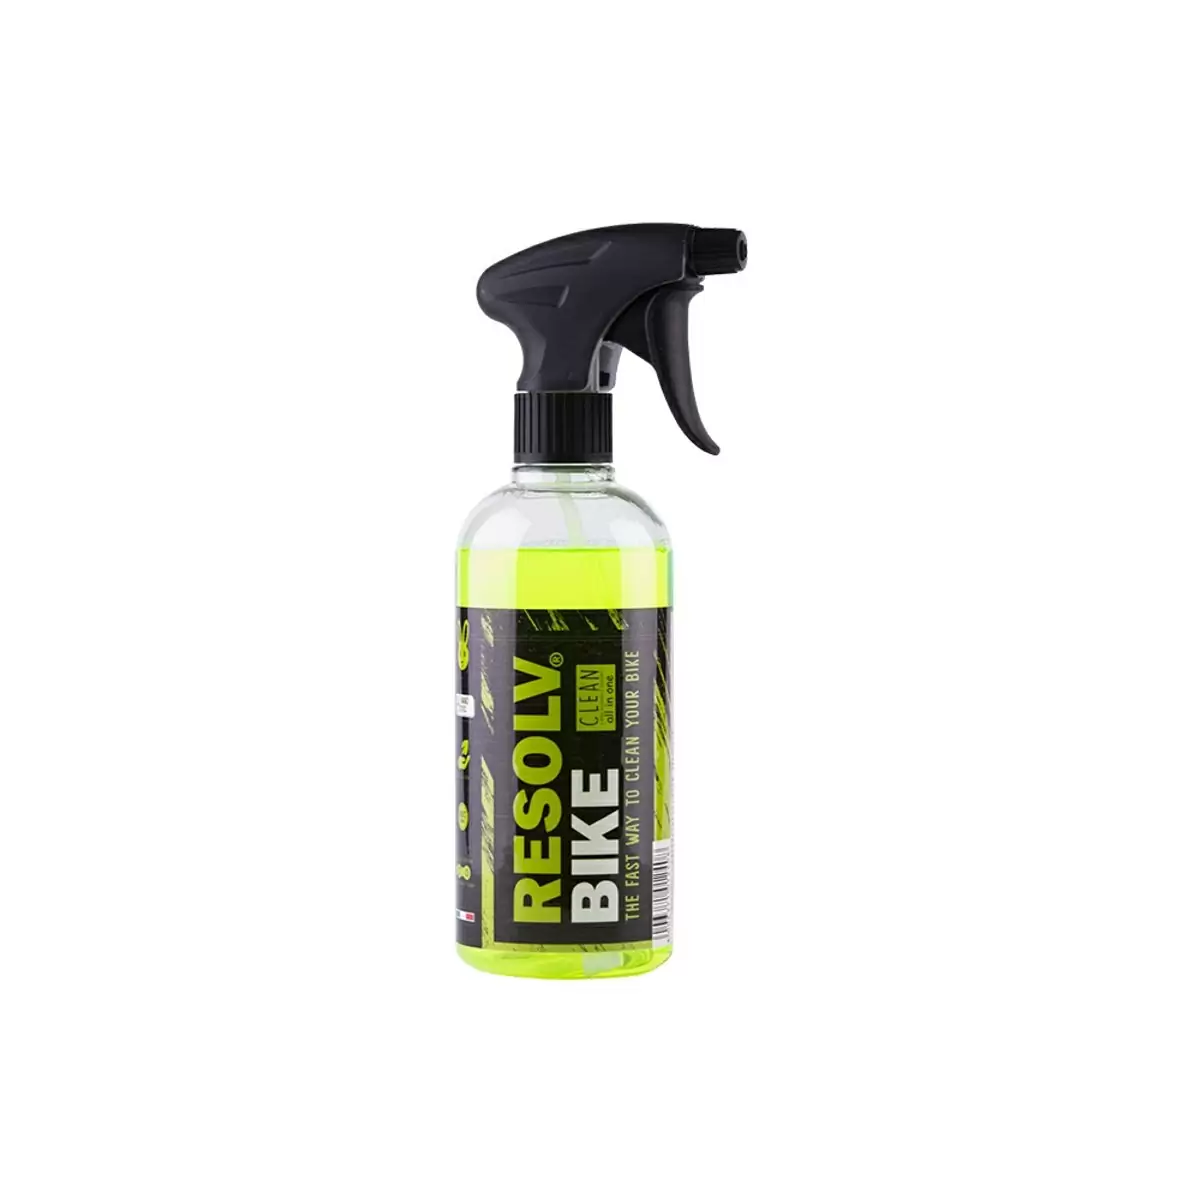 Detergente para limpeza de bicicletas 500ml - image